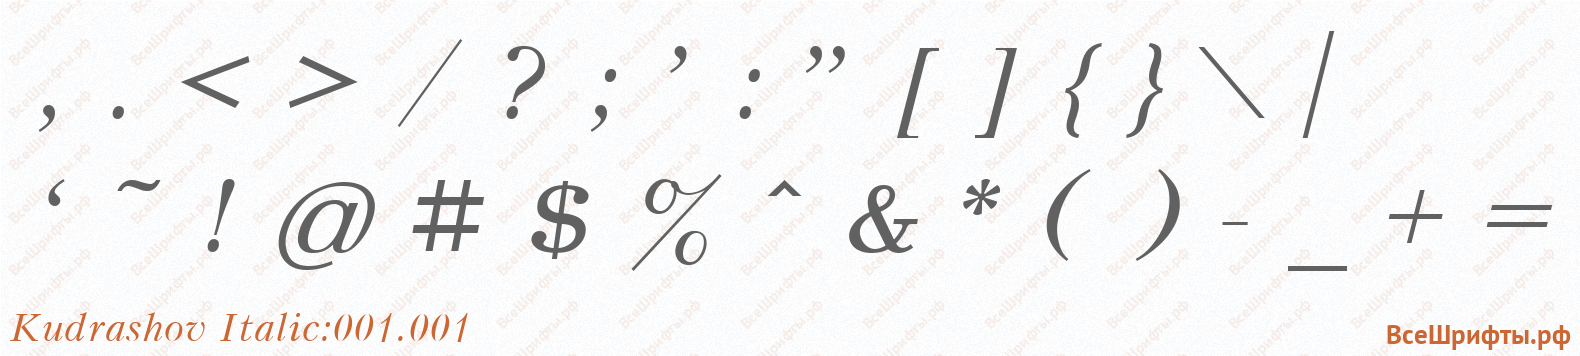 Шрифт Kudrashov Italic:001.001 со знаками препинания и пунктуации